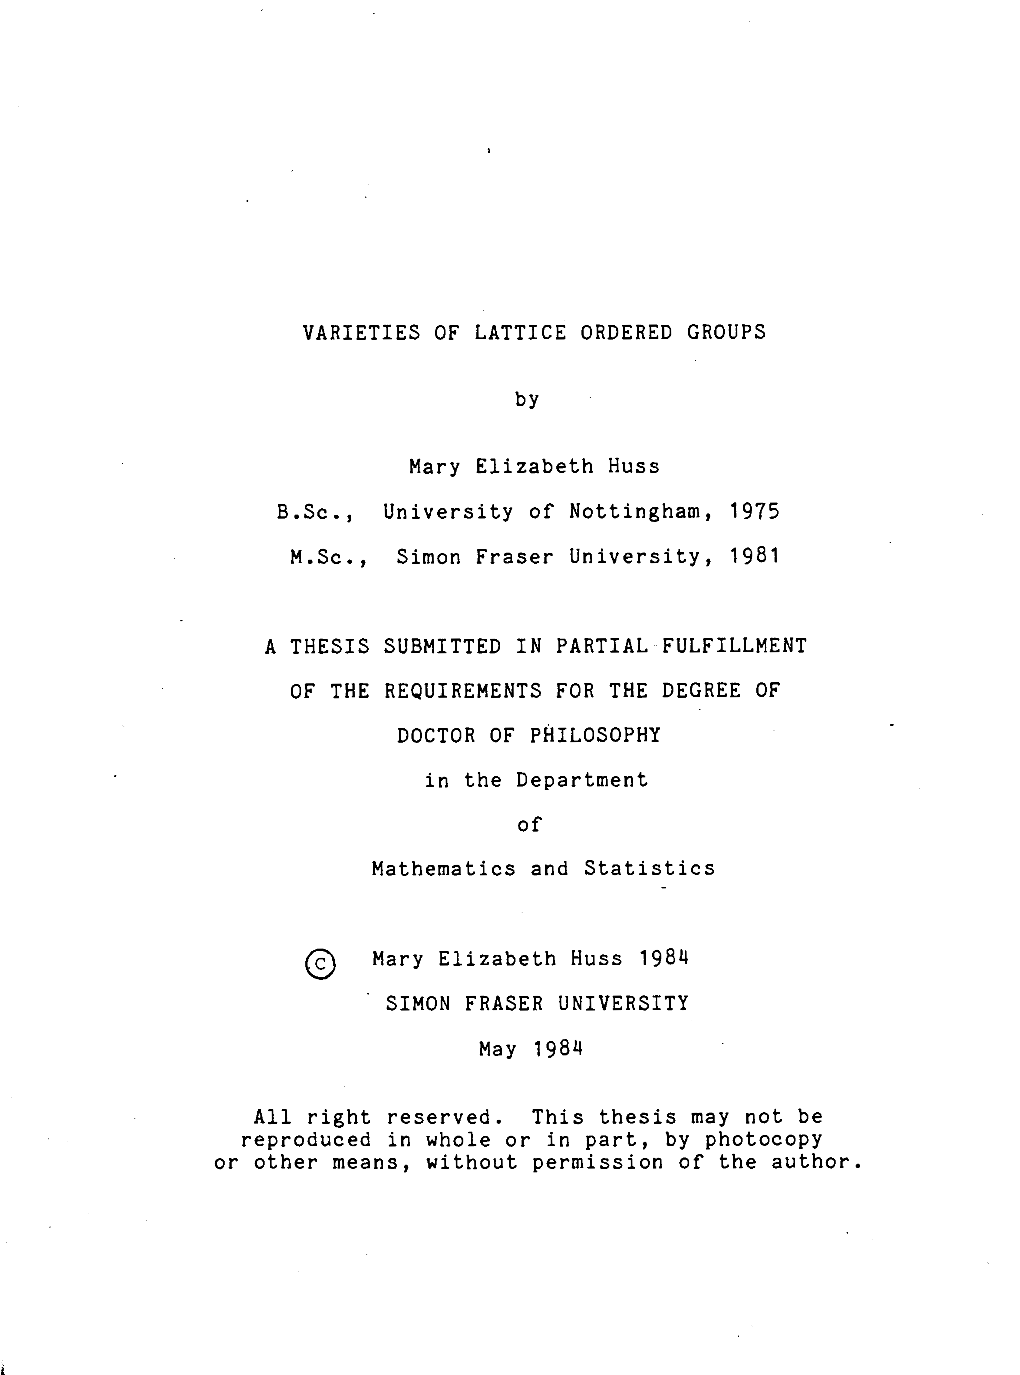 Varieties of Lattice Ordered Groups / by Mary Elizabeth Huss